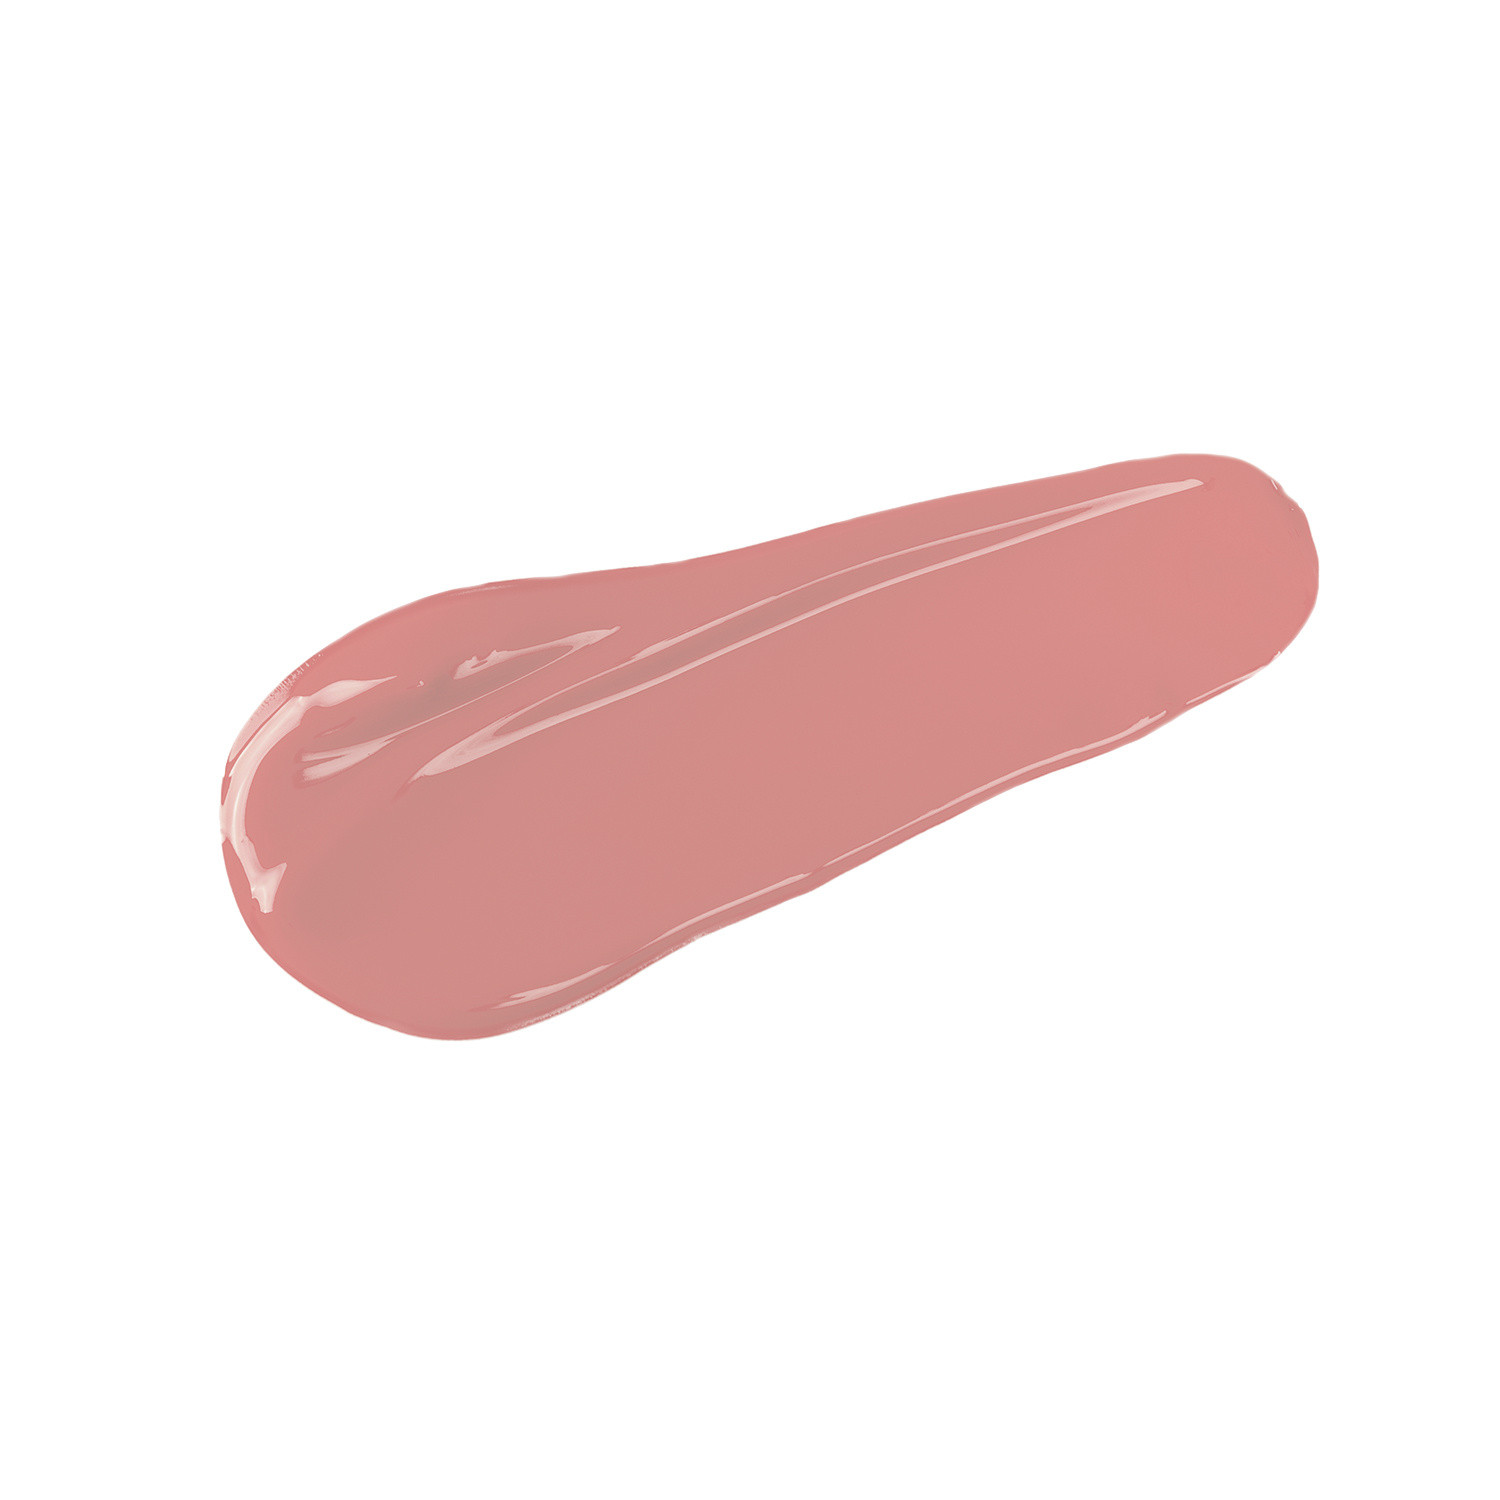 STAY ON ME - Long-Lasting Liquid Lipstick - 31 Nude rosato, Nude, large image number 2